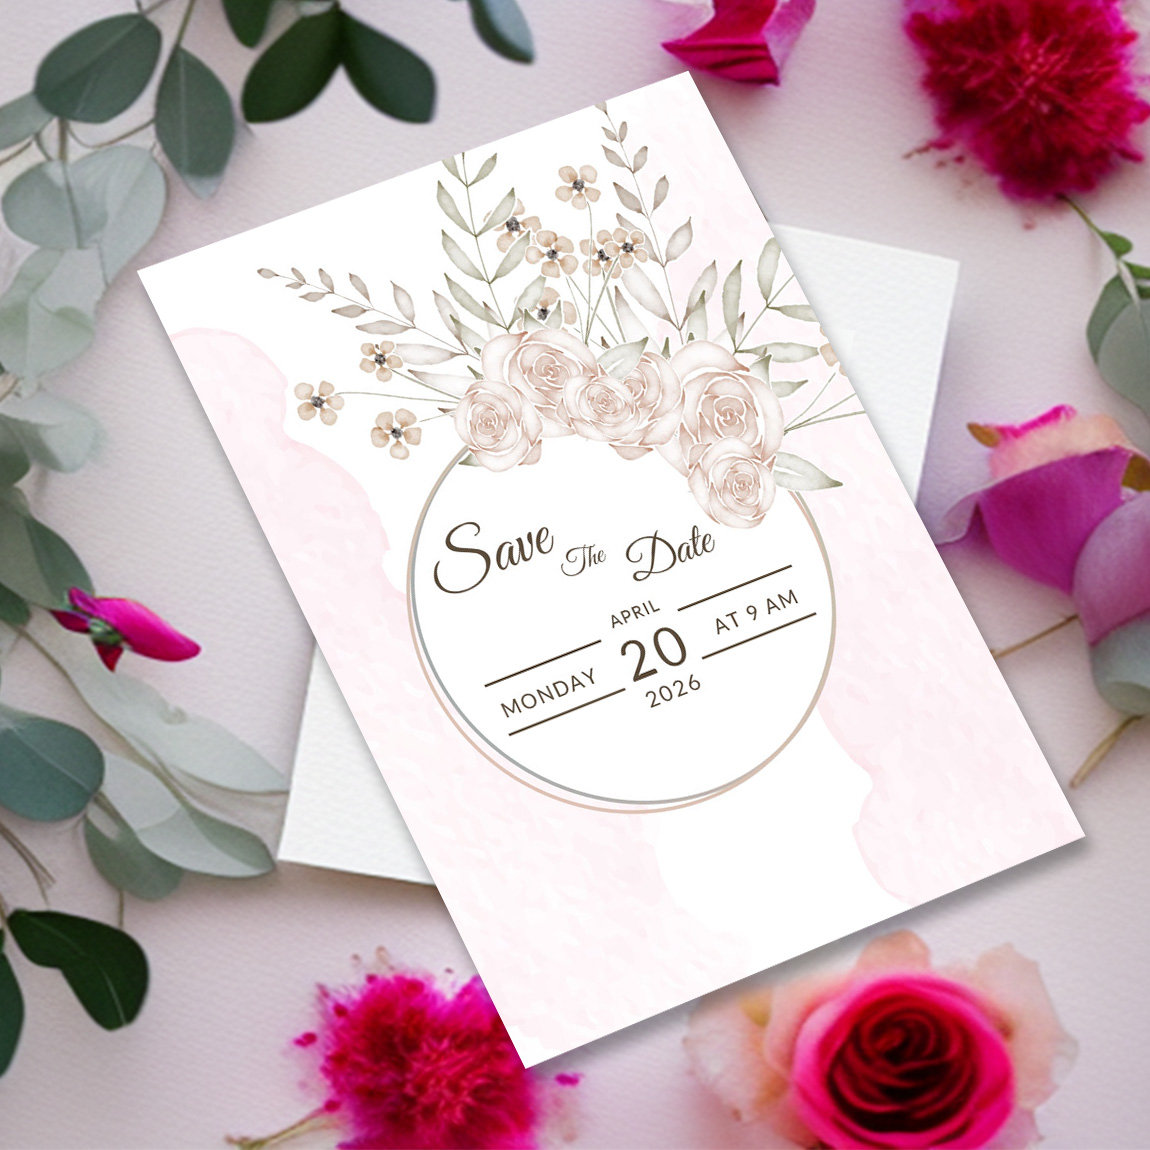 Image with elegant wedding invitation with flowers.